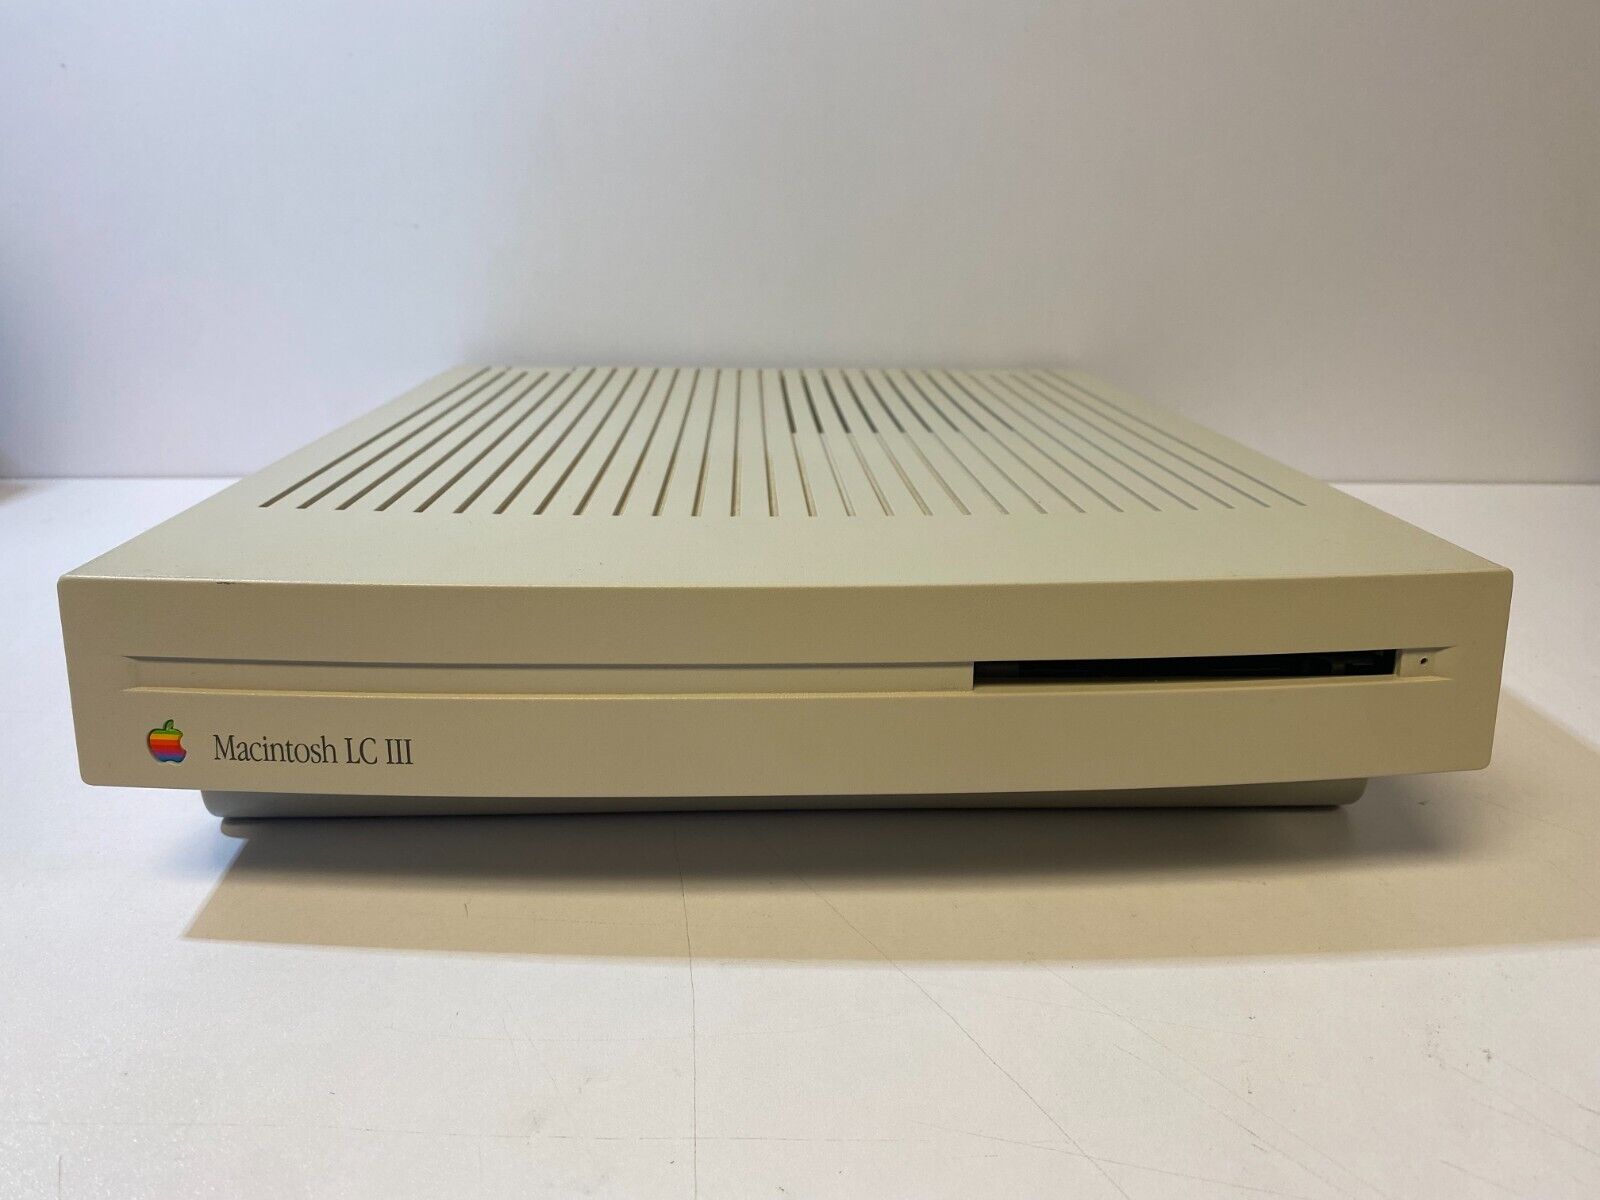 1993 Vintage Apple Macintosh LCIII Computer M1254 - No HDD - Tested, Working